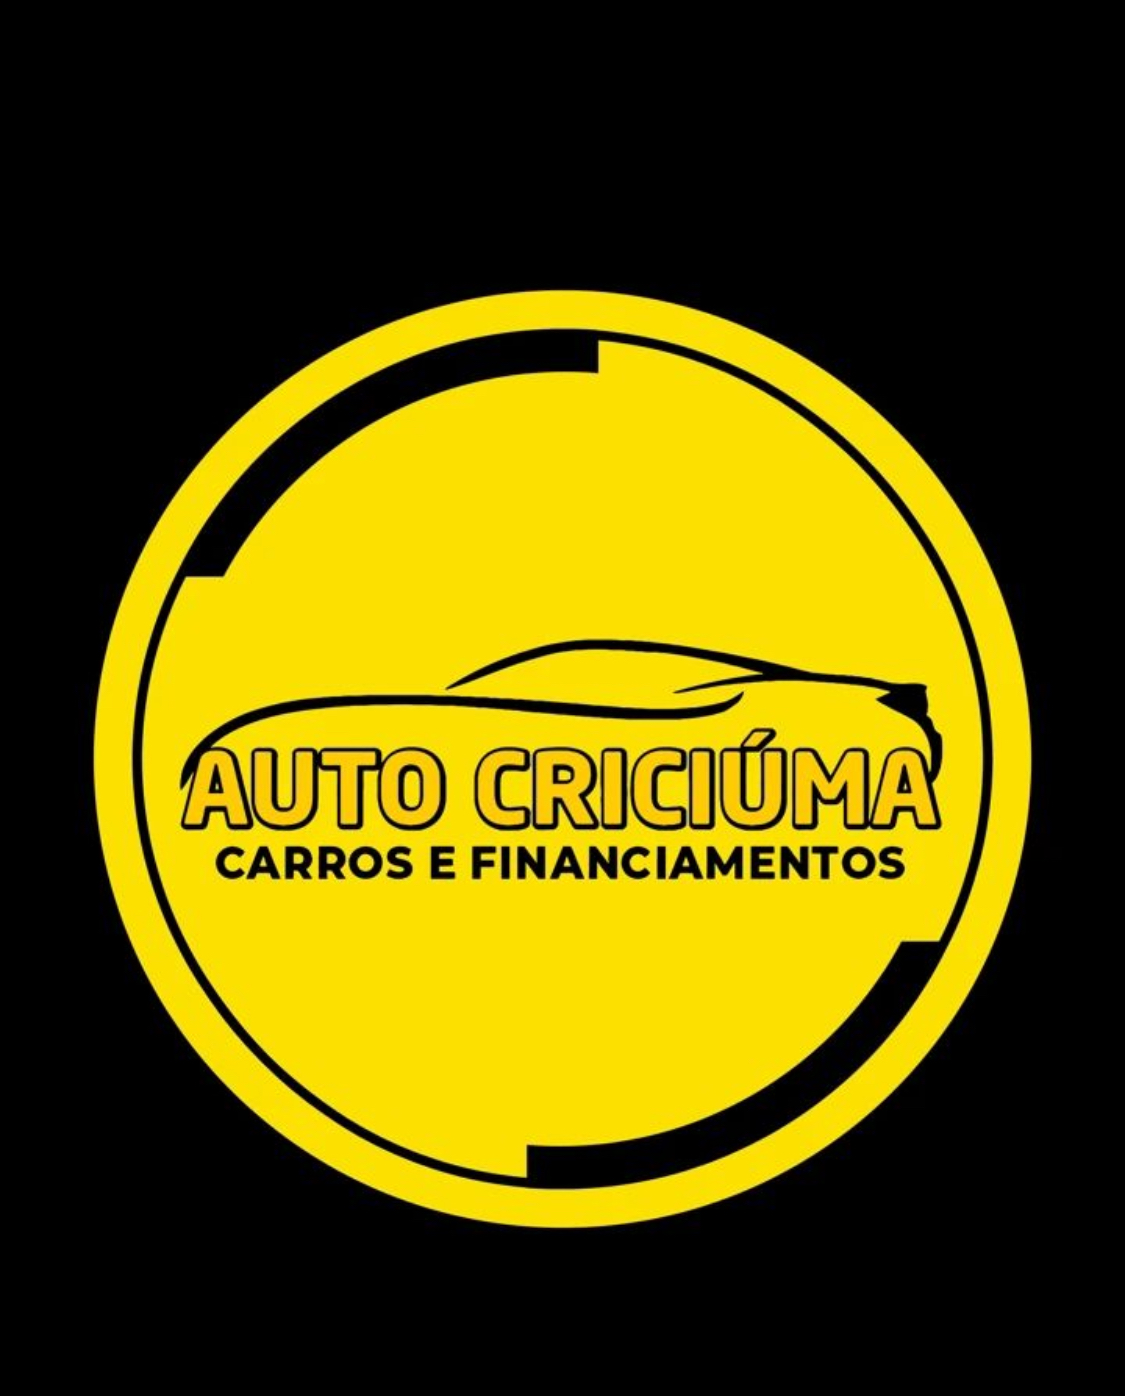 Auto Criciuma Motors